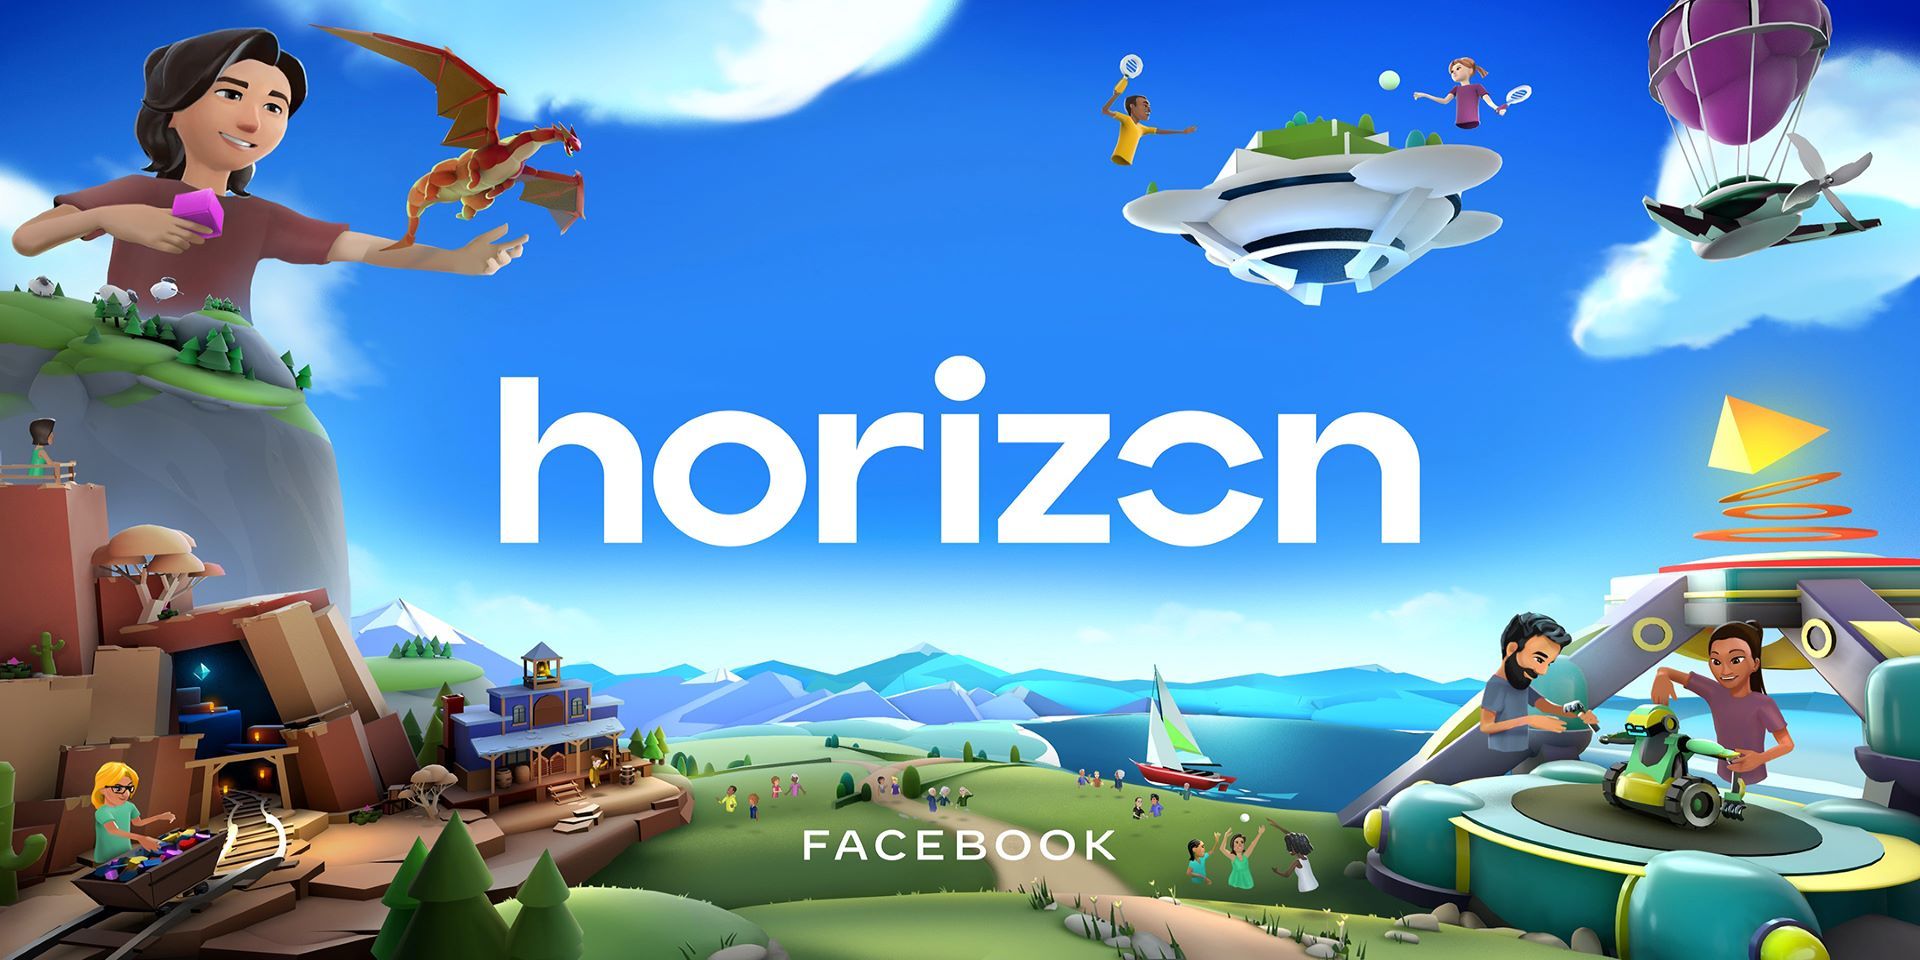 Horizon Worlds: Meta's ambition in Metaverse social networking